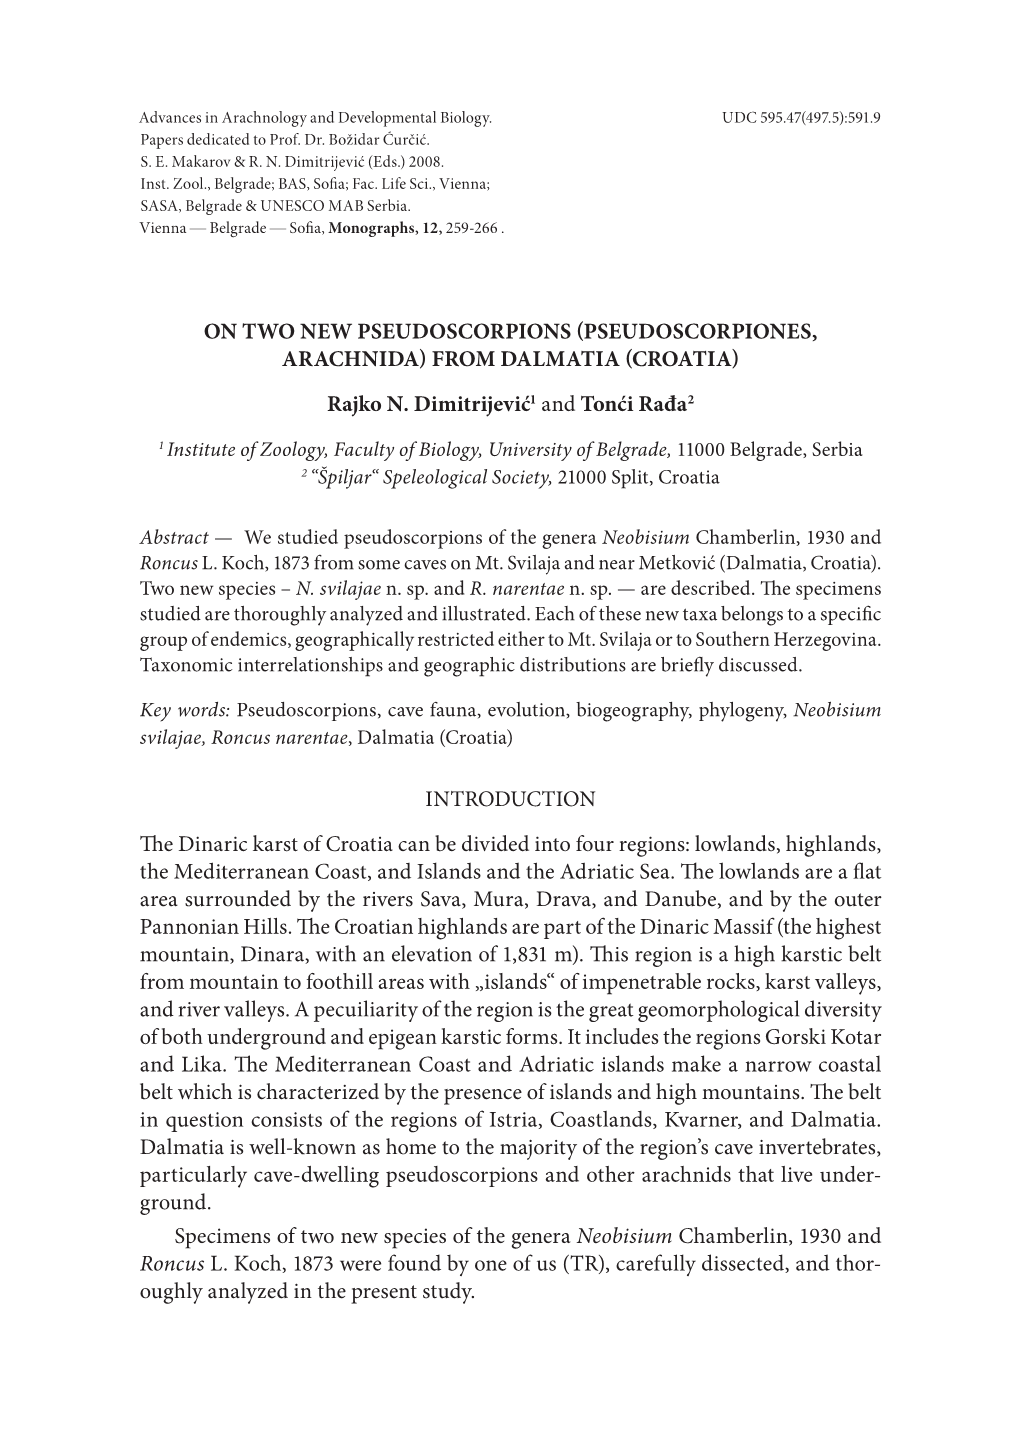 ON TWO NEW PSEUDOSCORPIONS (PSEUDOSCORPIONES, ARACHNIDA) from DALMATIA (CROATIA) Rajko N. Dimitrijević1 and Tonći Rađa2 INTRO